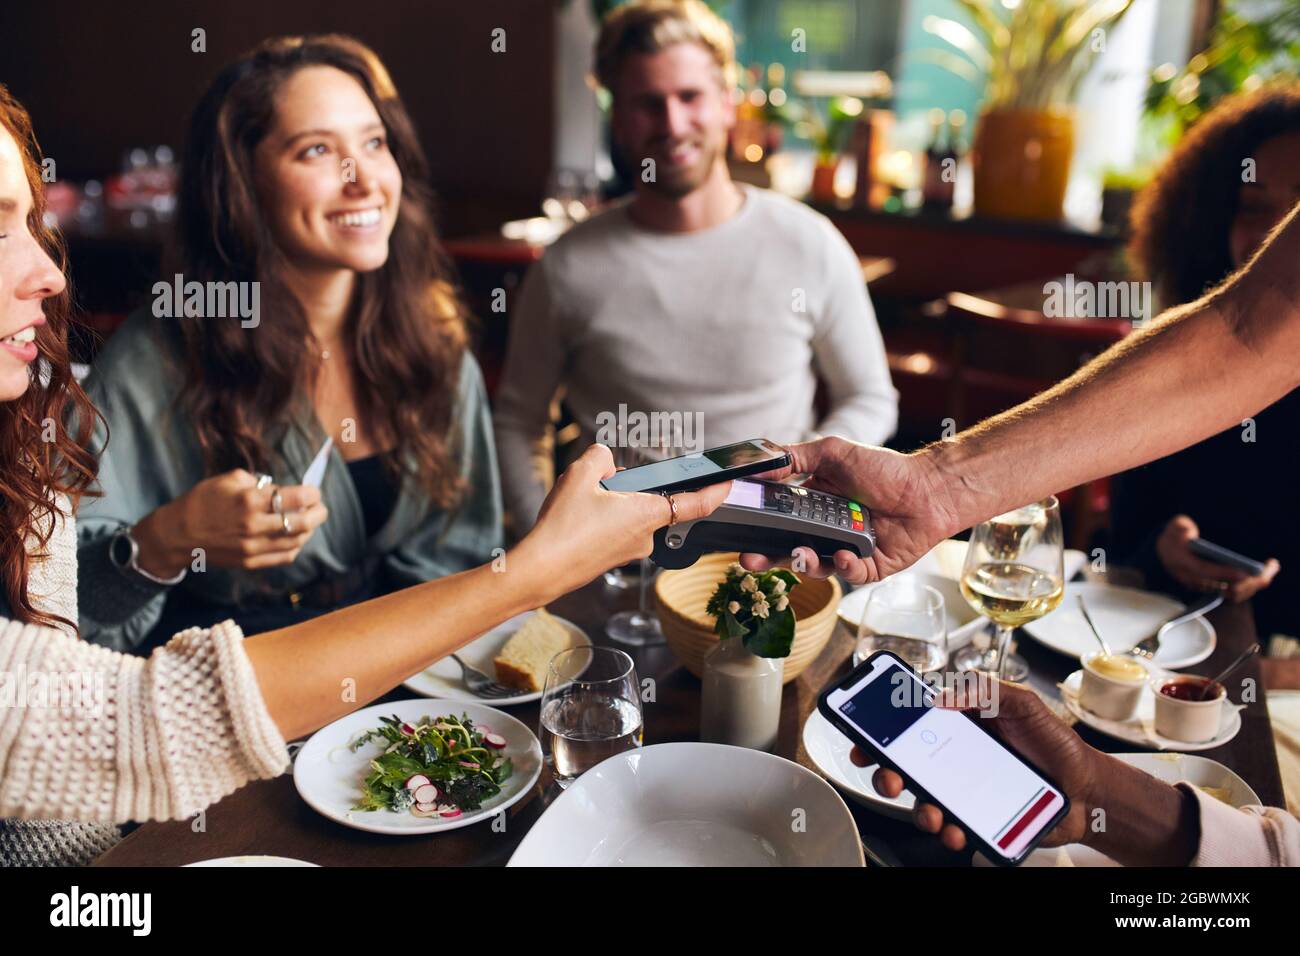 Freunde zahlen kontaktlos im Restaurant Stockfotografie - Alamy